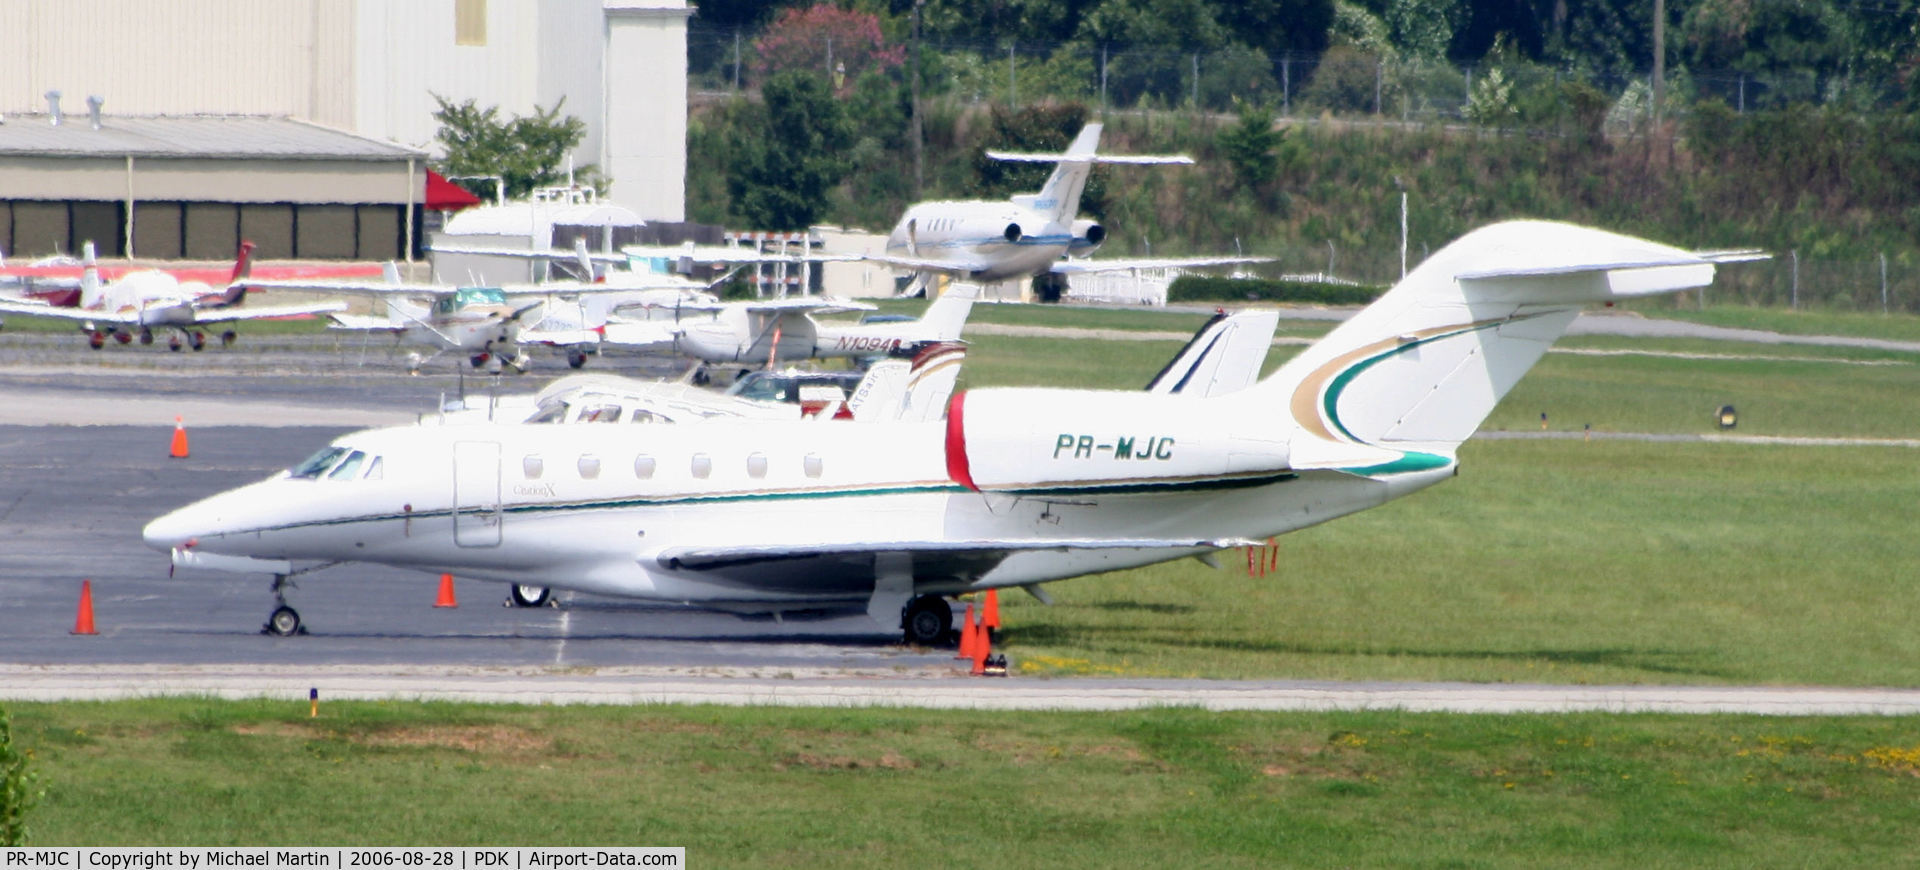 PR-MJC, 2005 Cessna 750 Citation X Citation X C/N 750-0237, Visitor from Brazil (MJC - My Jesus Christ)